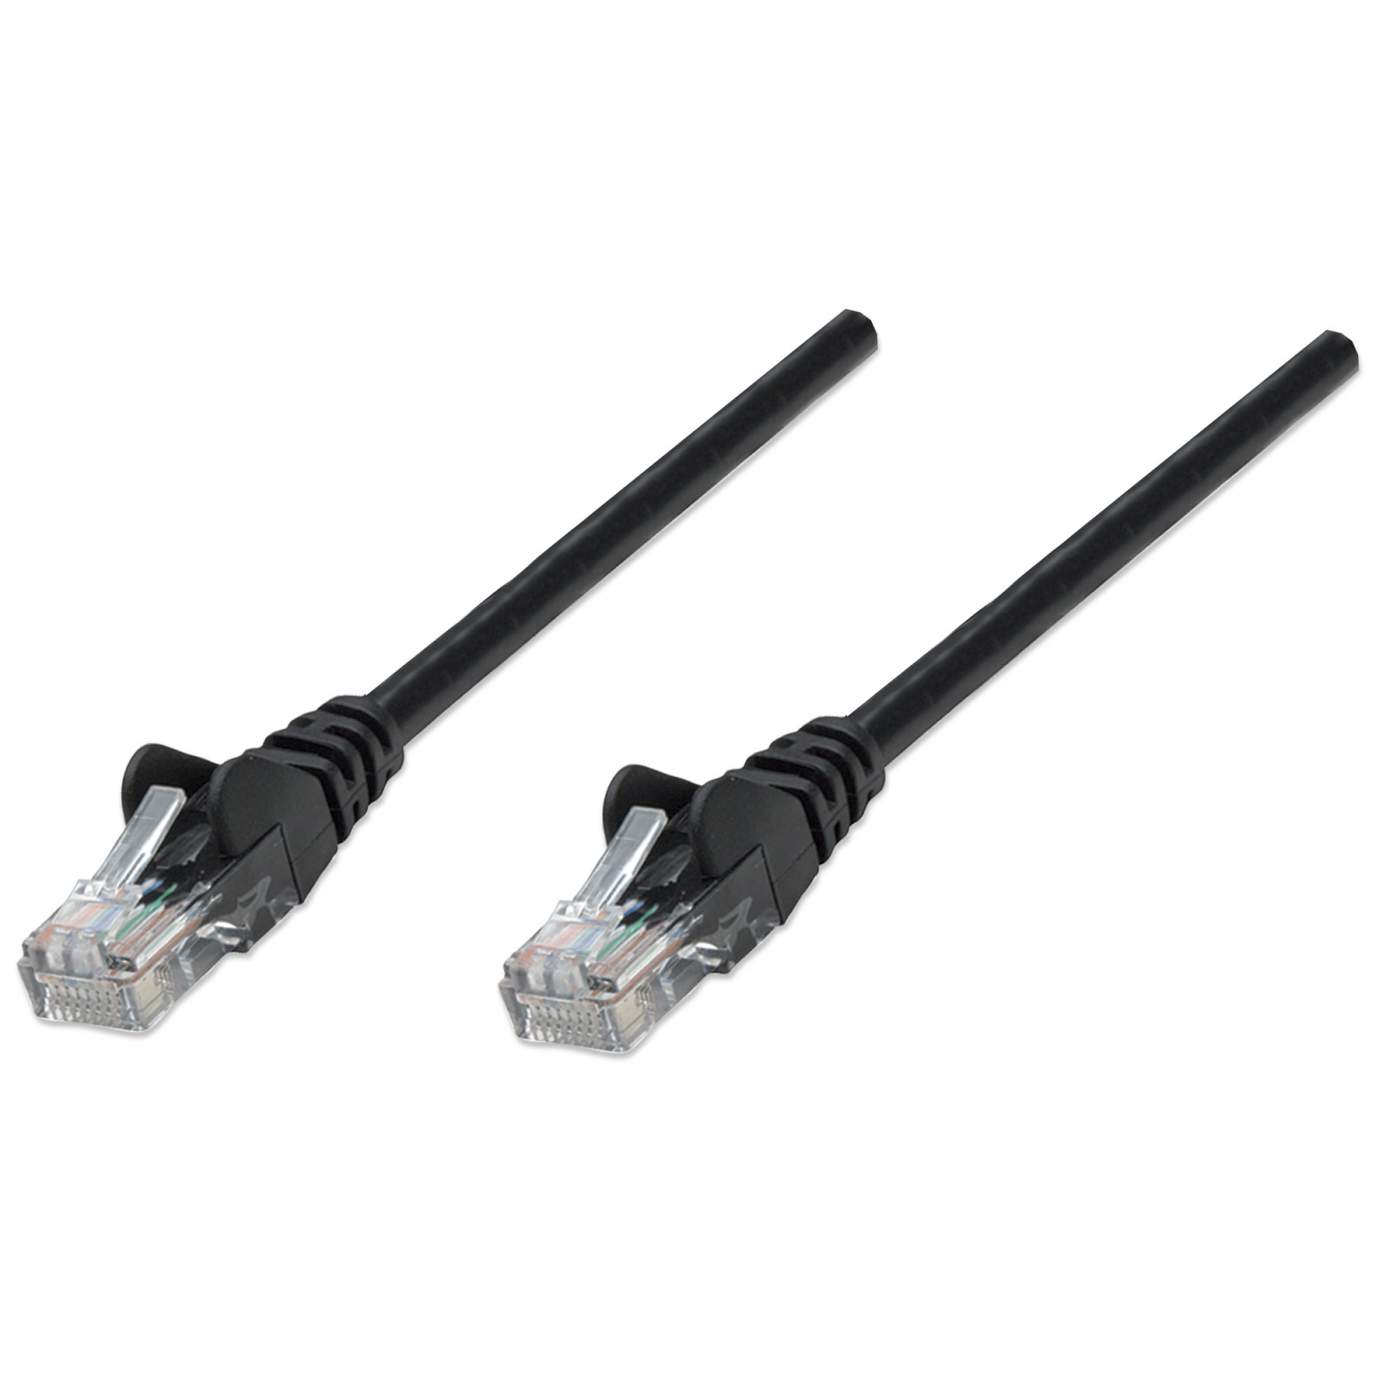 Network Cable, Cat5e, UTP Image 1